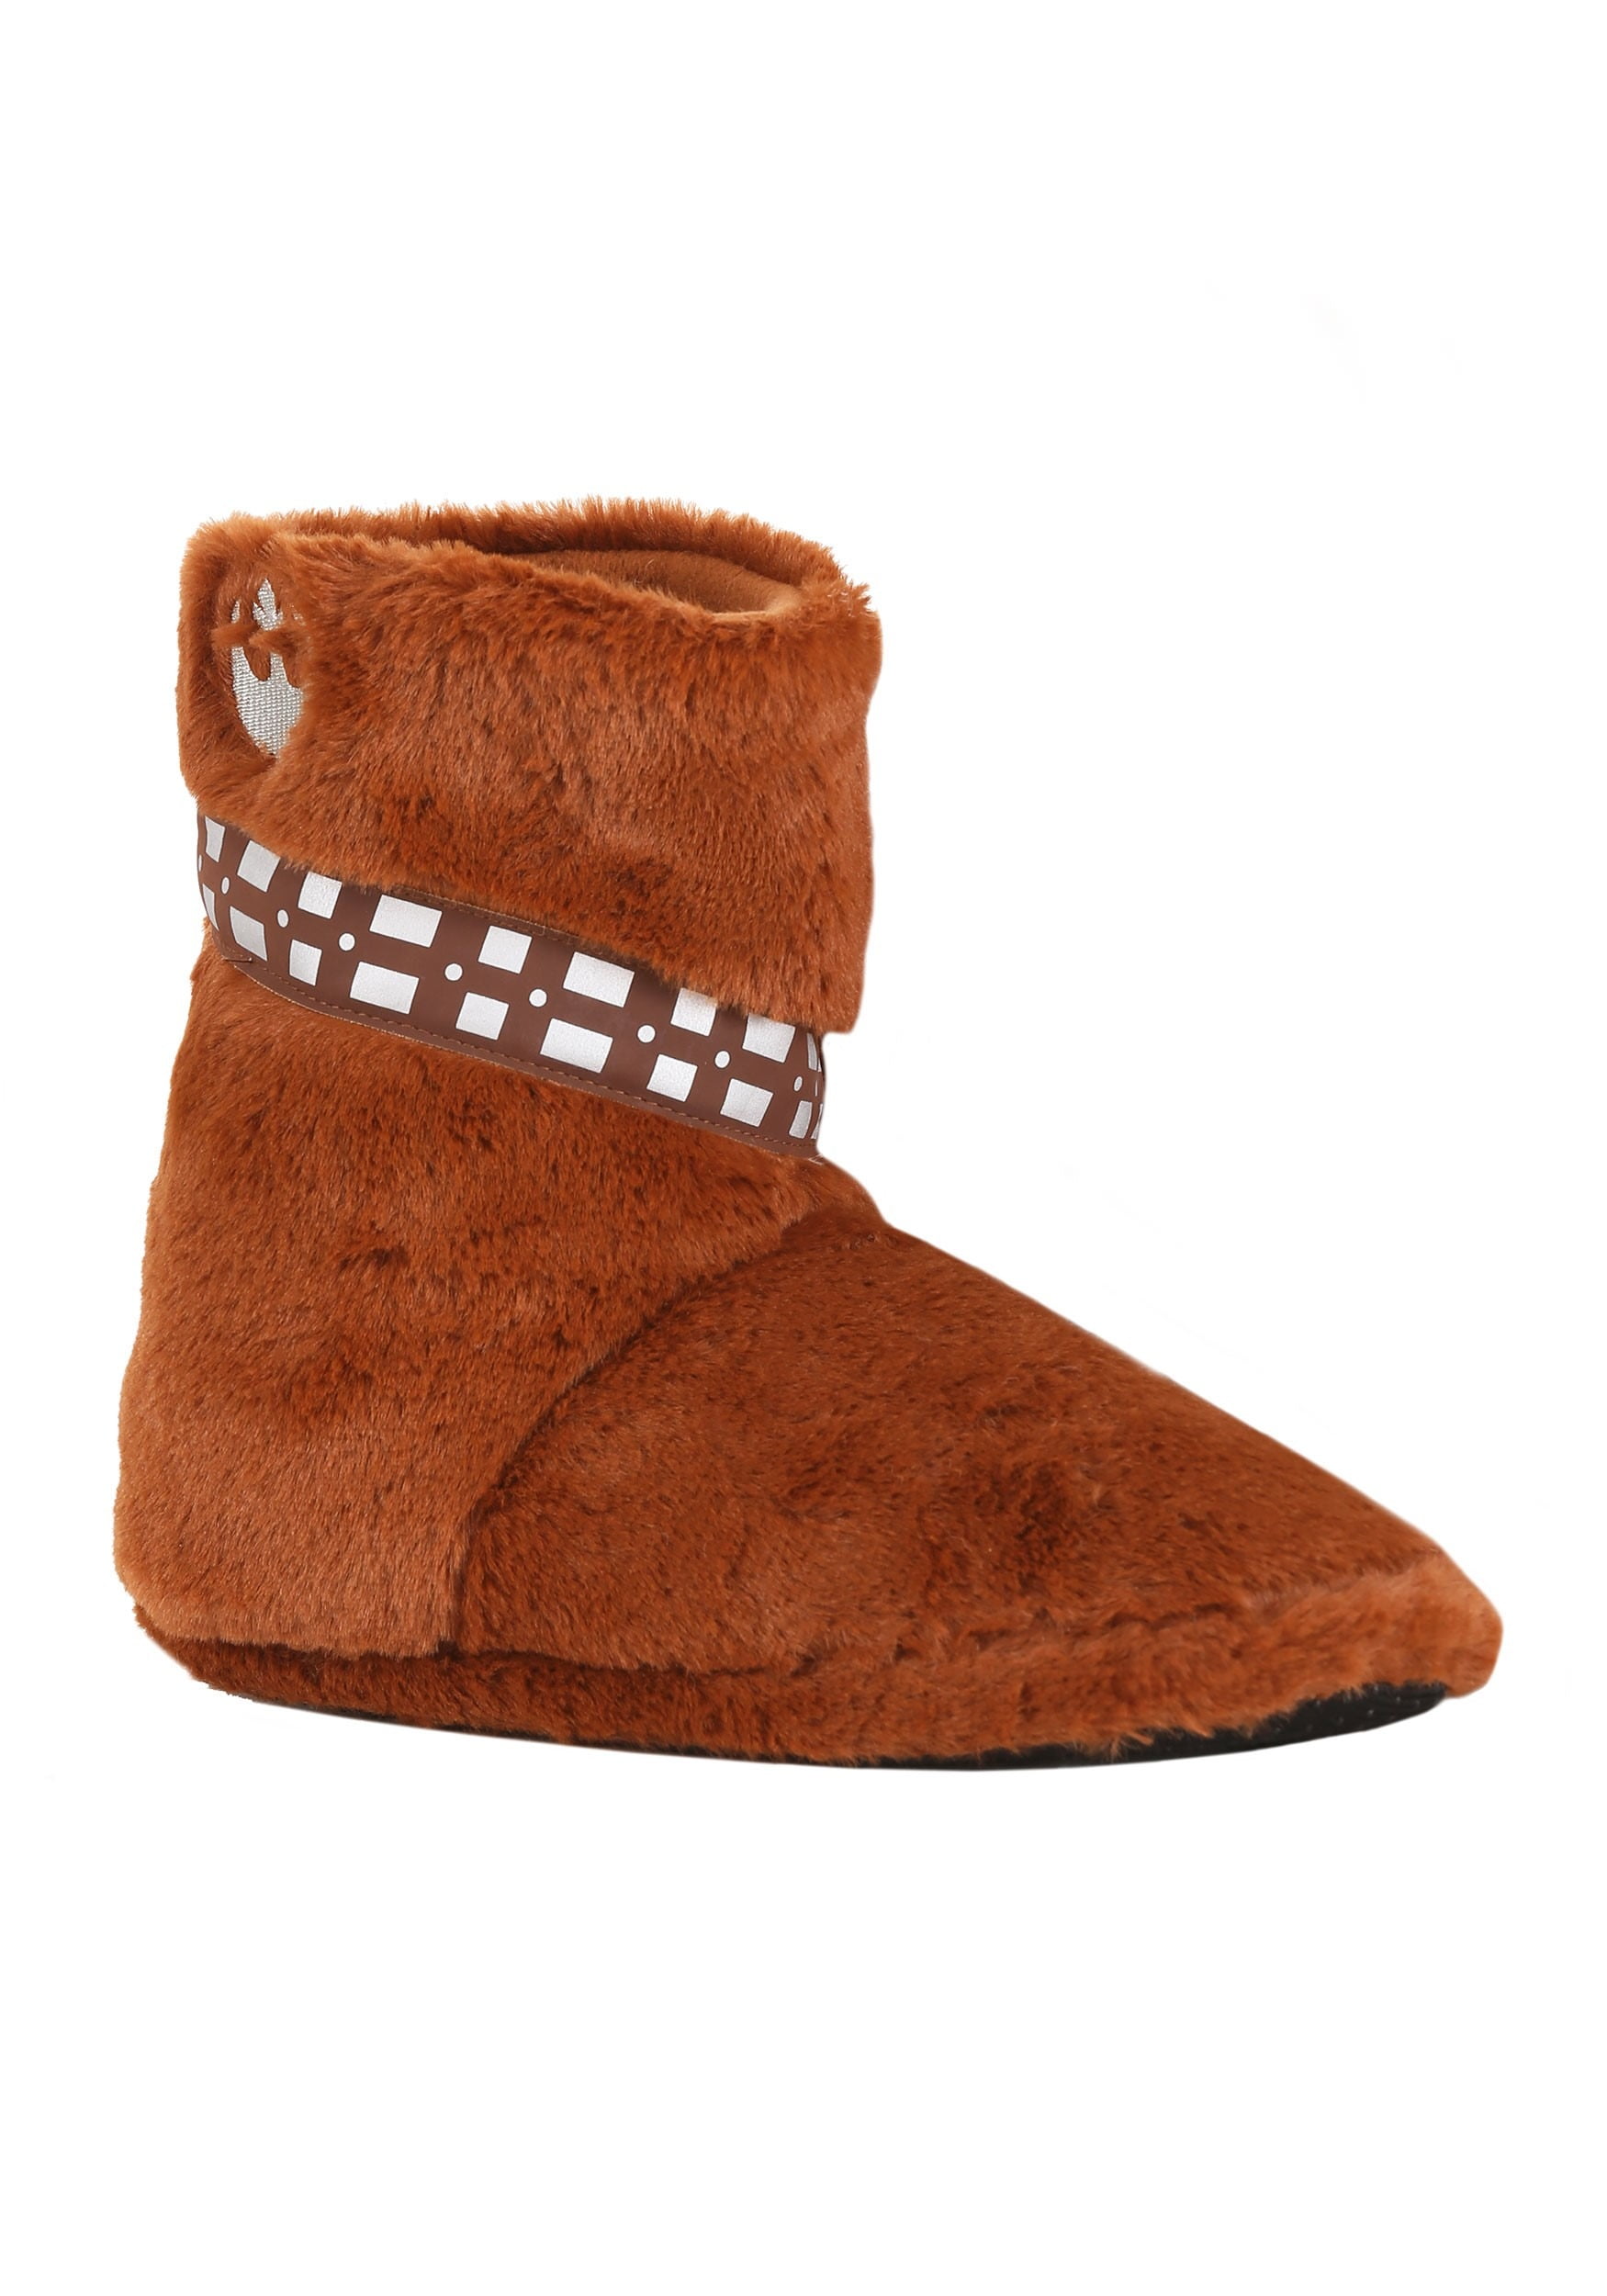 star wars slippers walmart